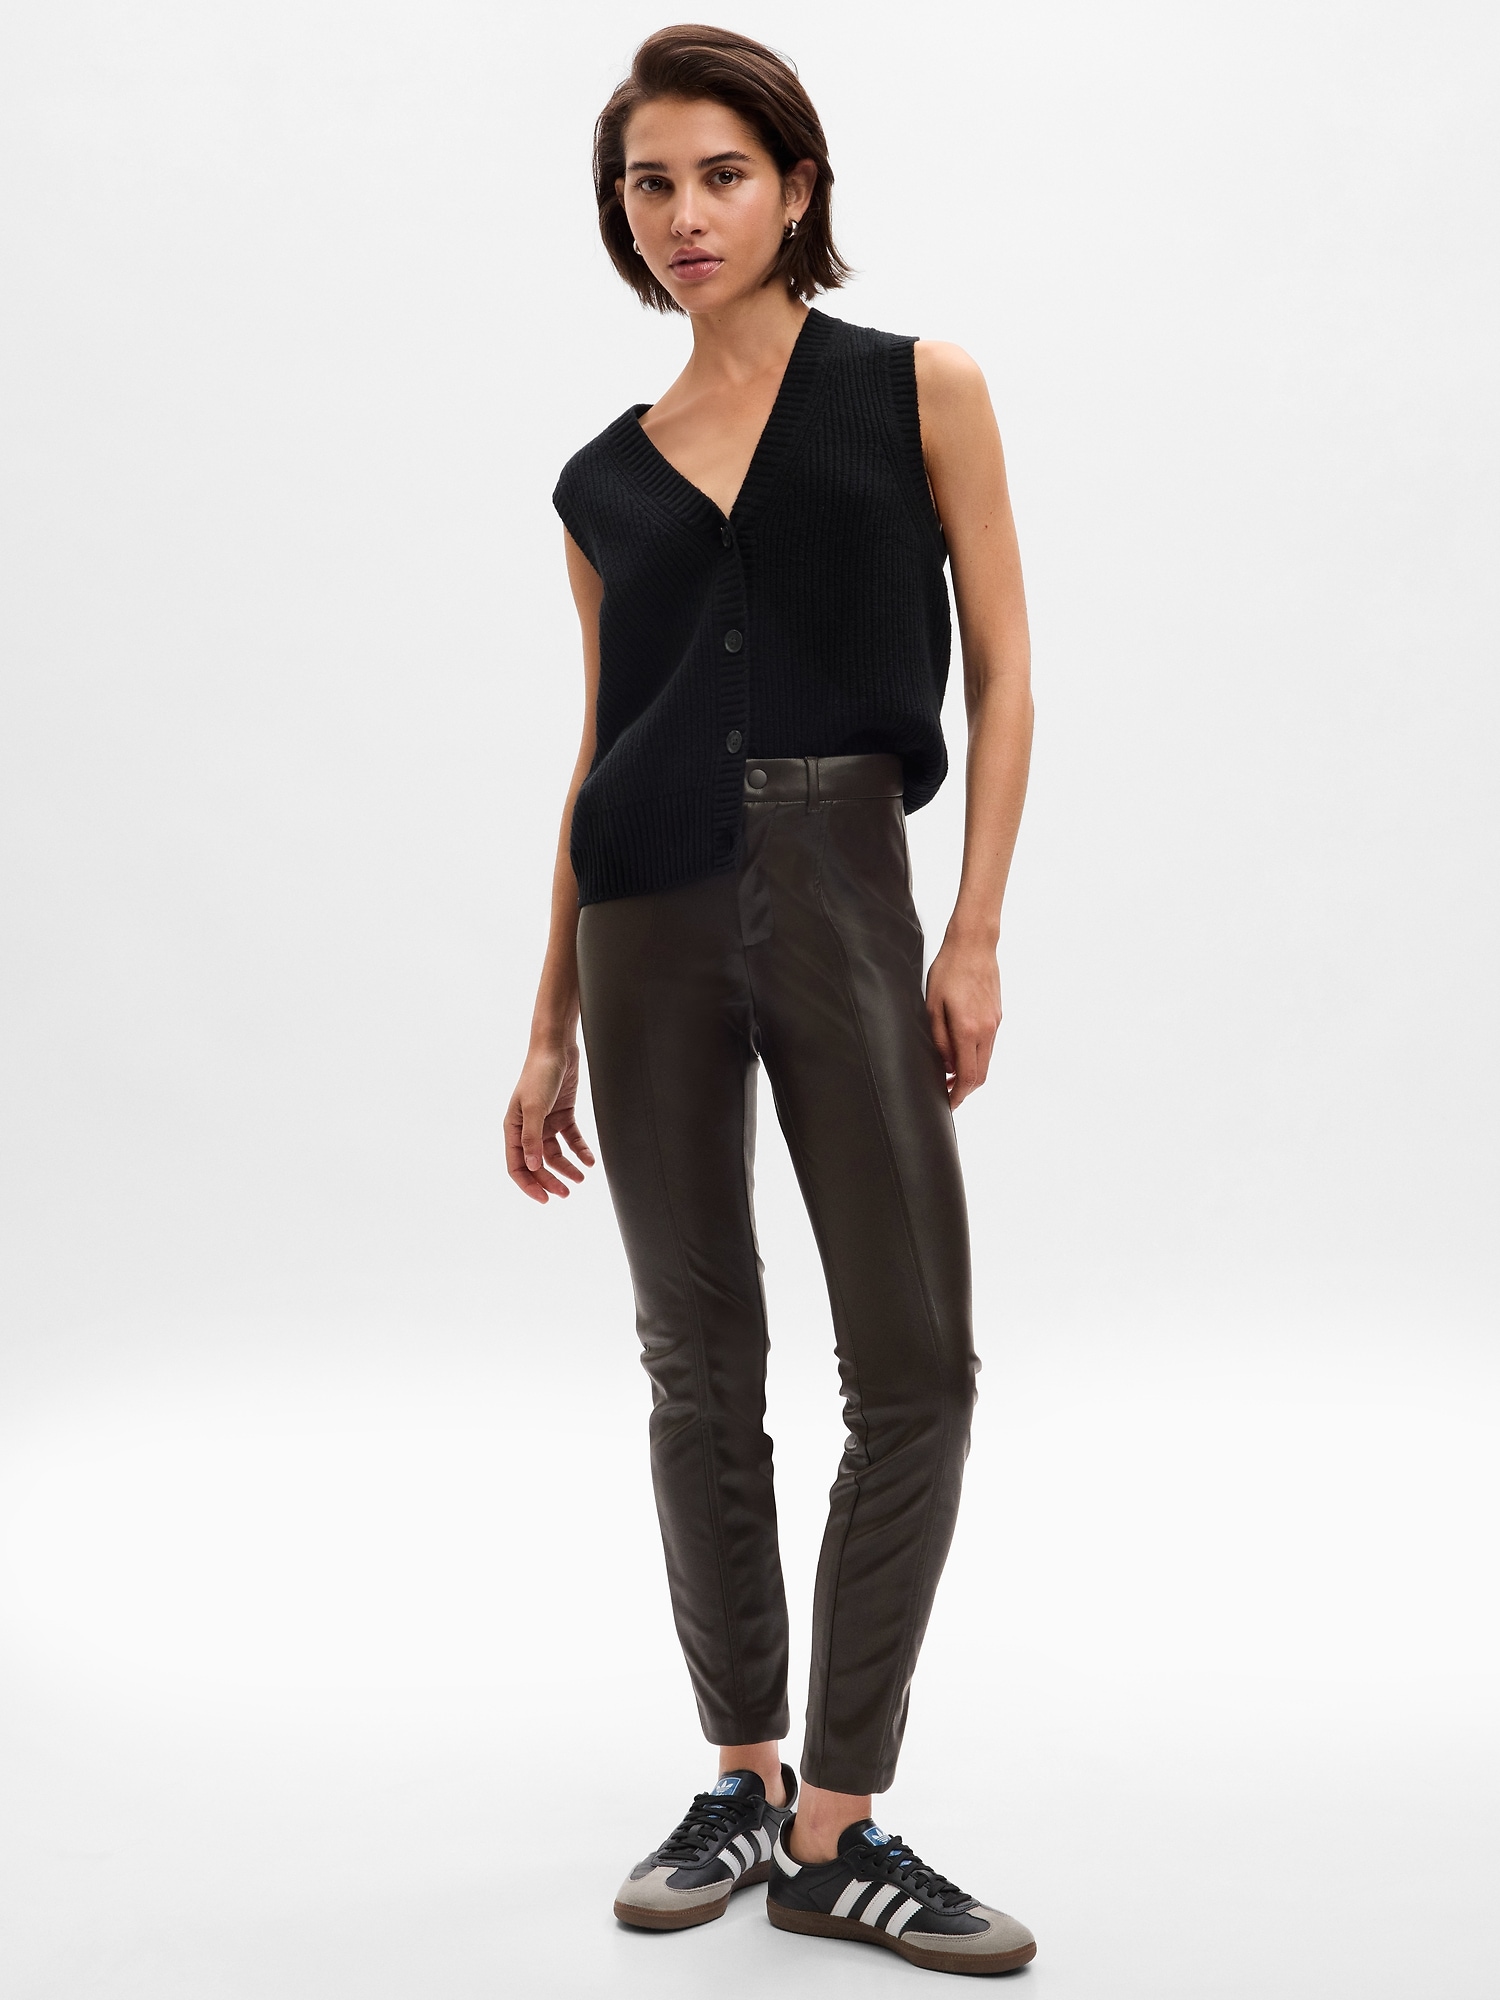 Zara khaki limited edition leather trousers size 6 | eBay